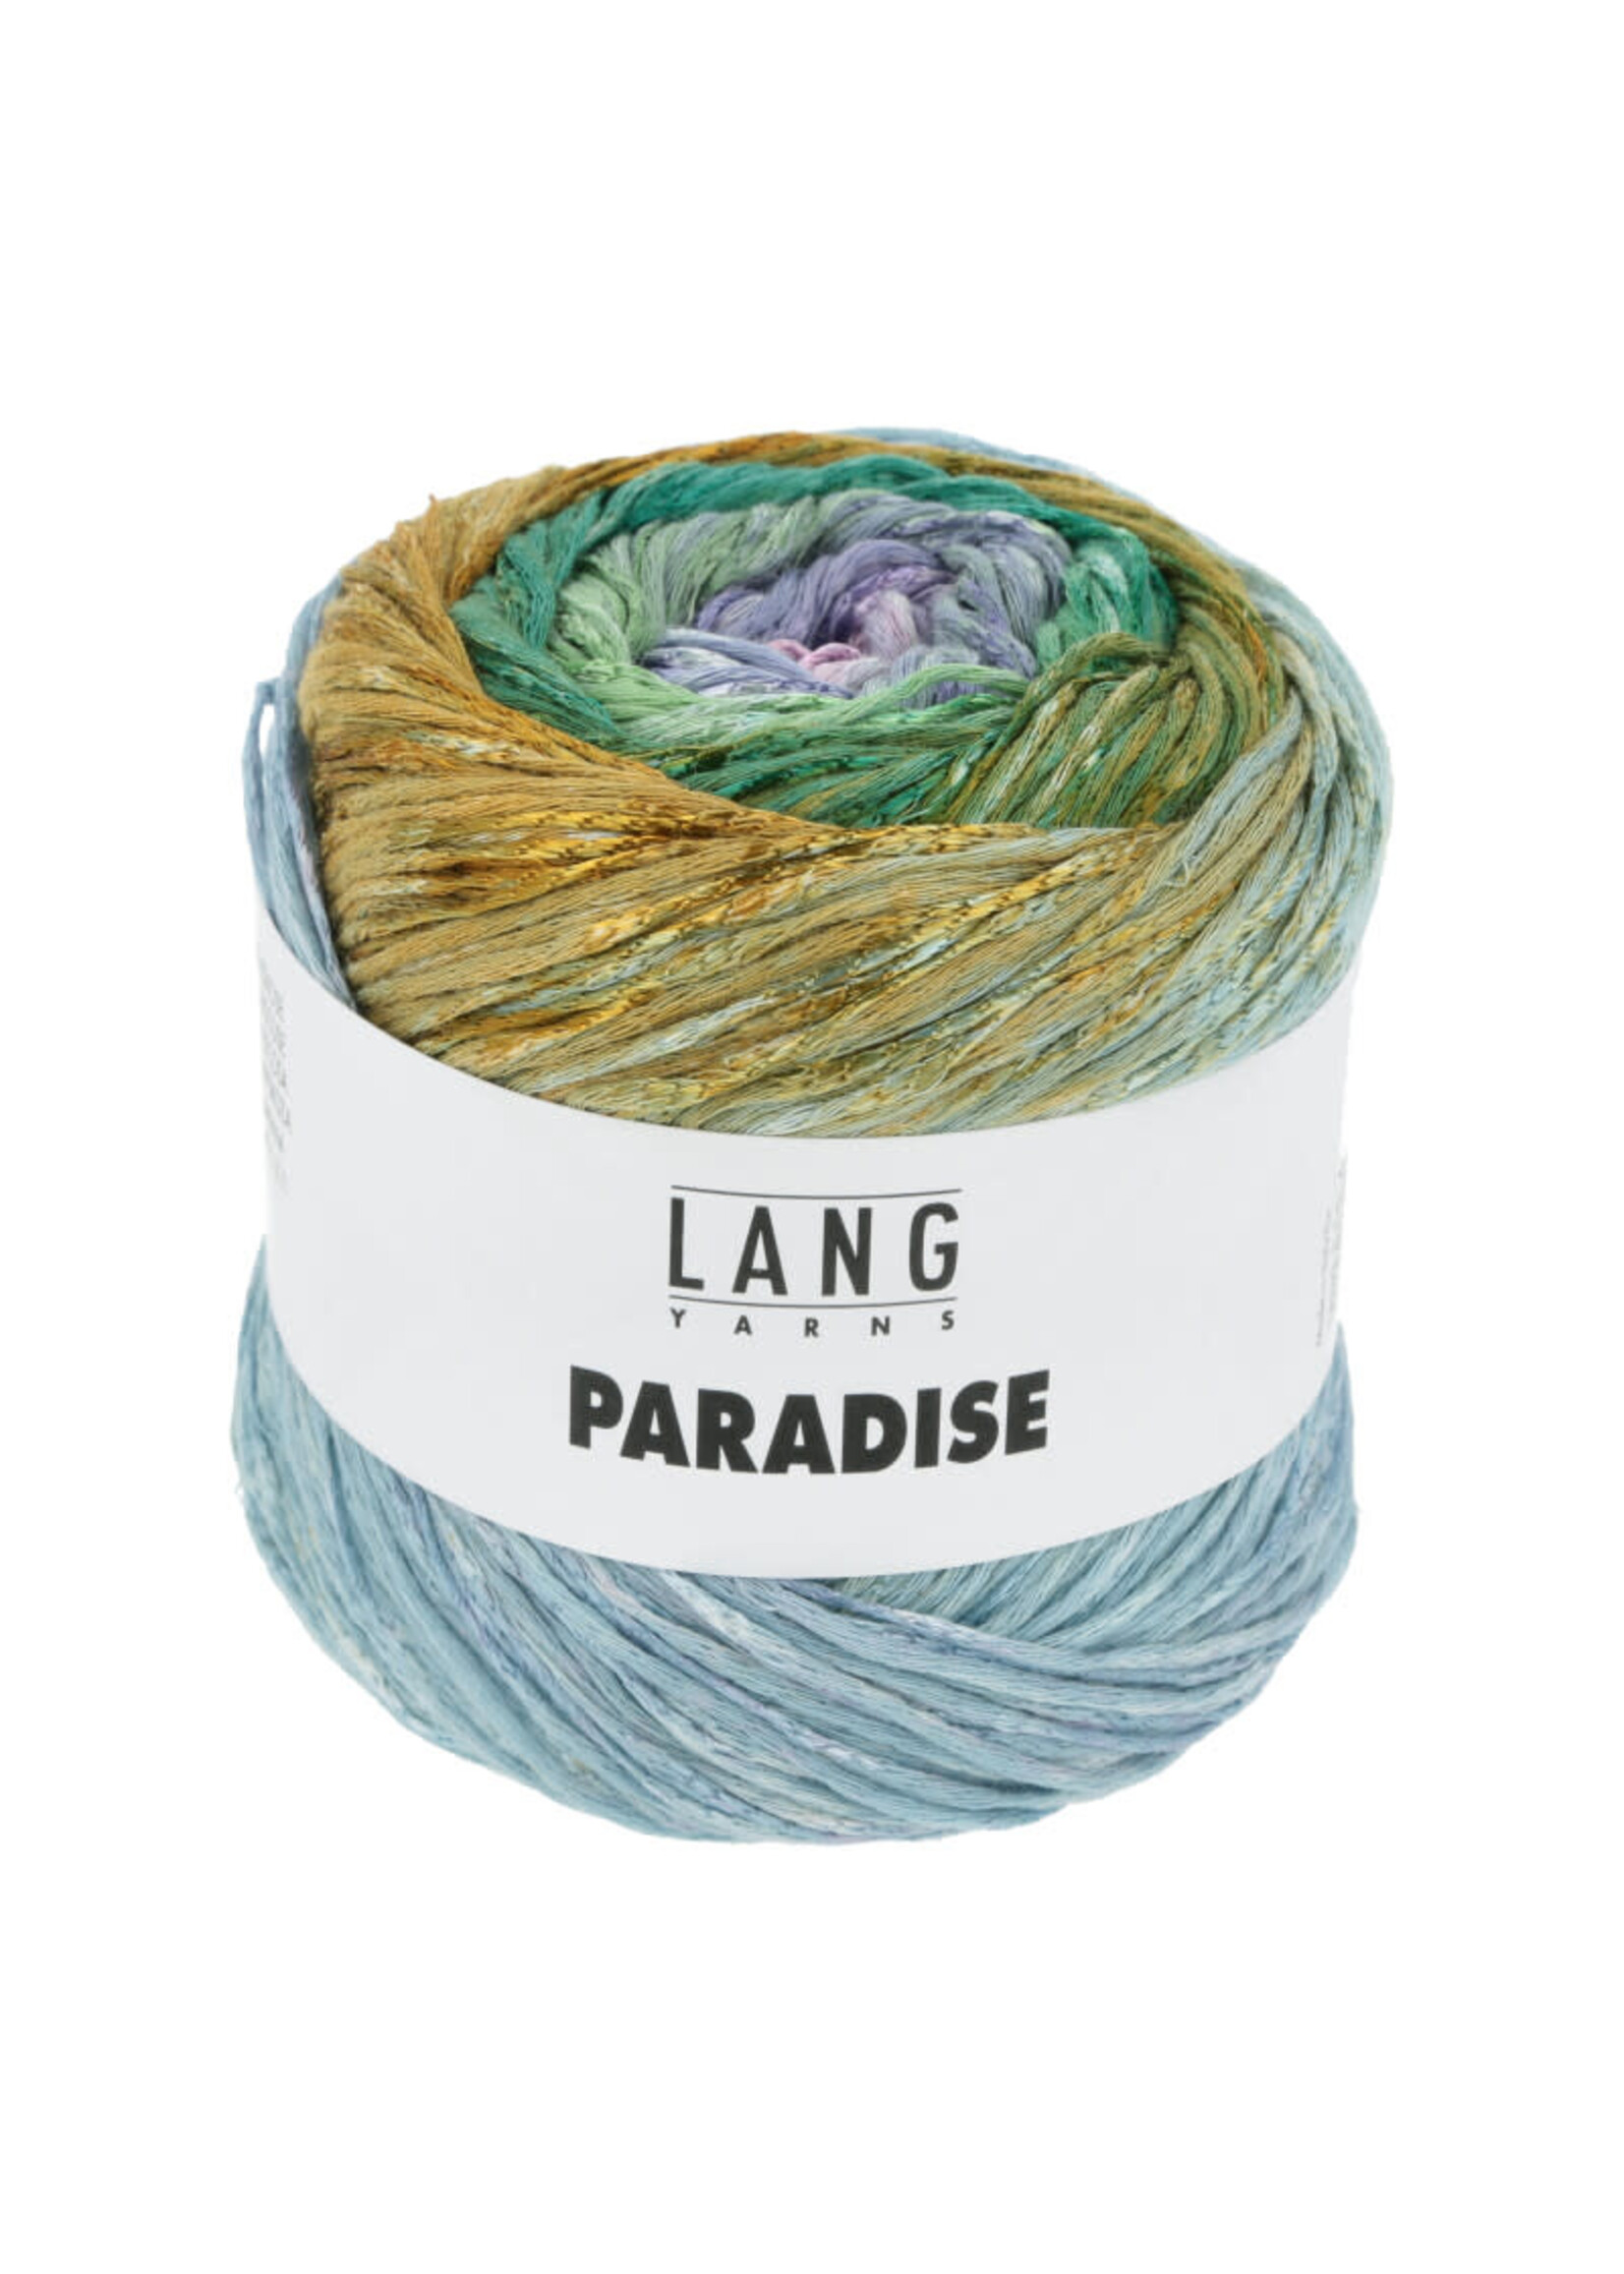 LangYarns Paradise 100gr - 0017 Groen/lila